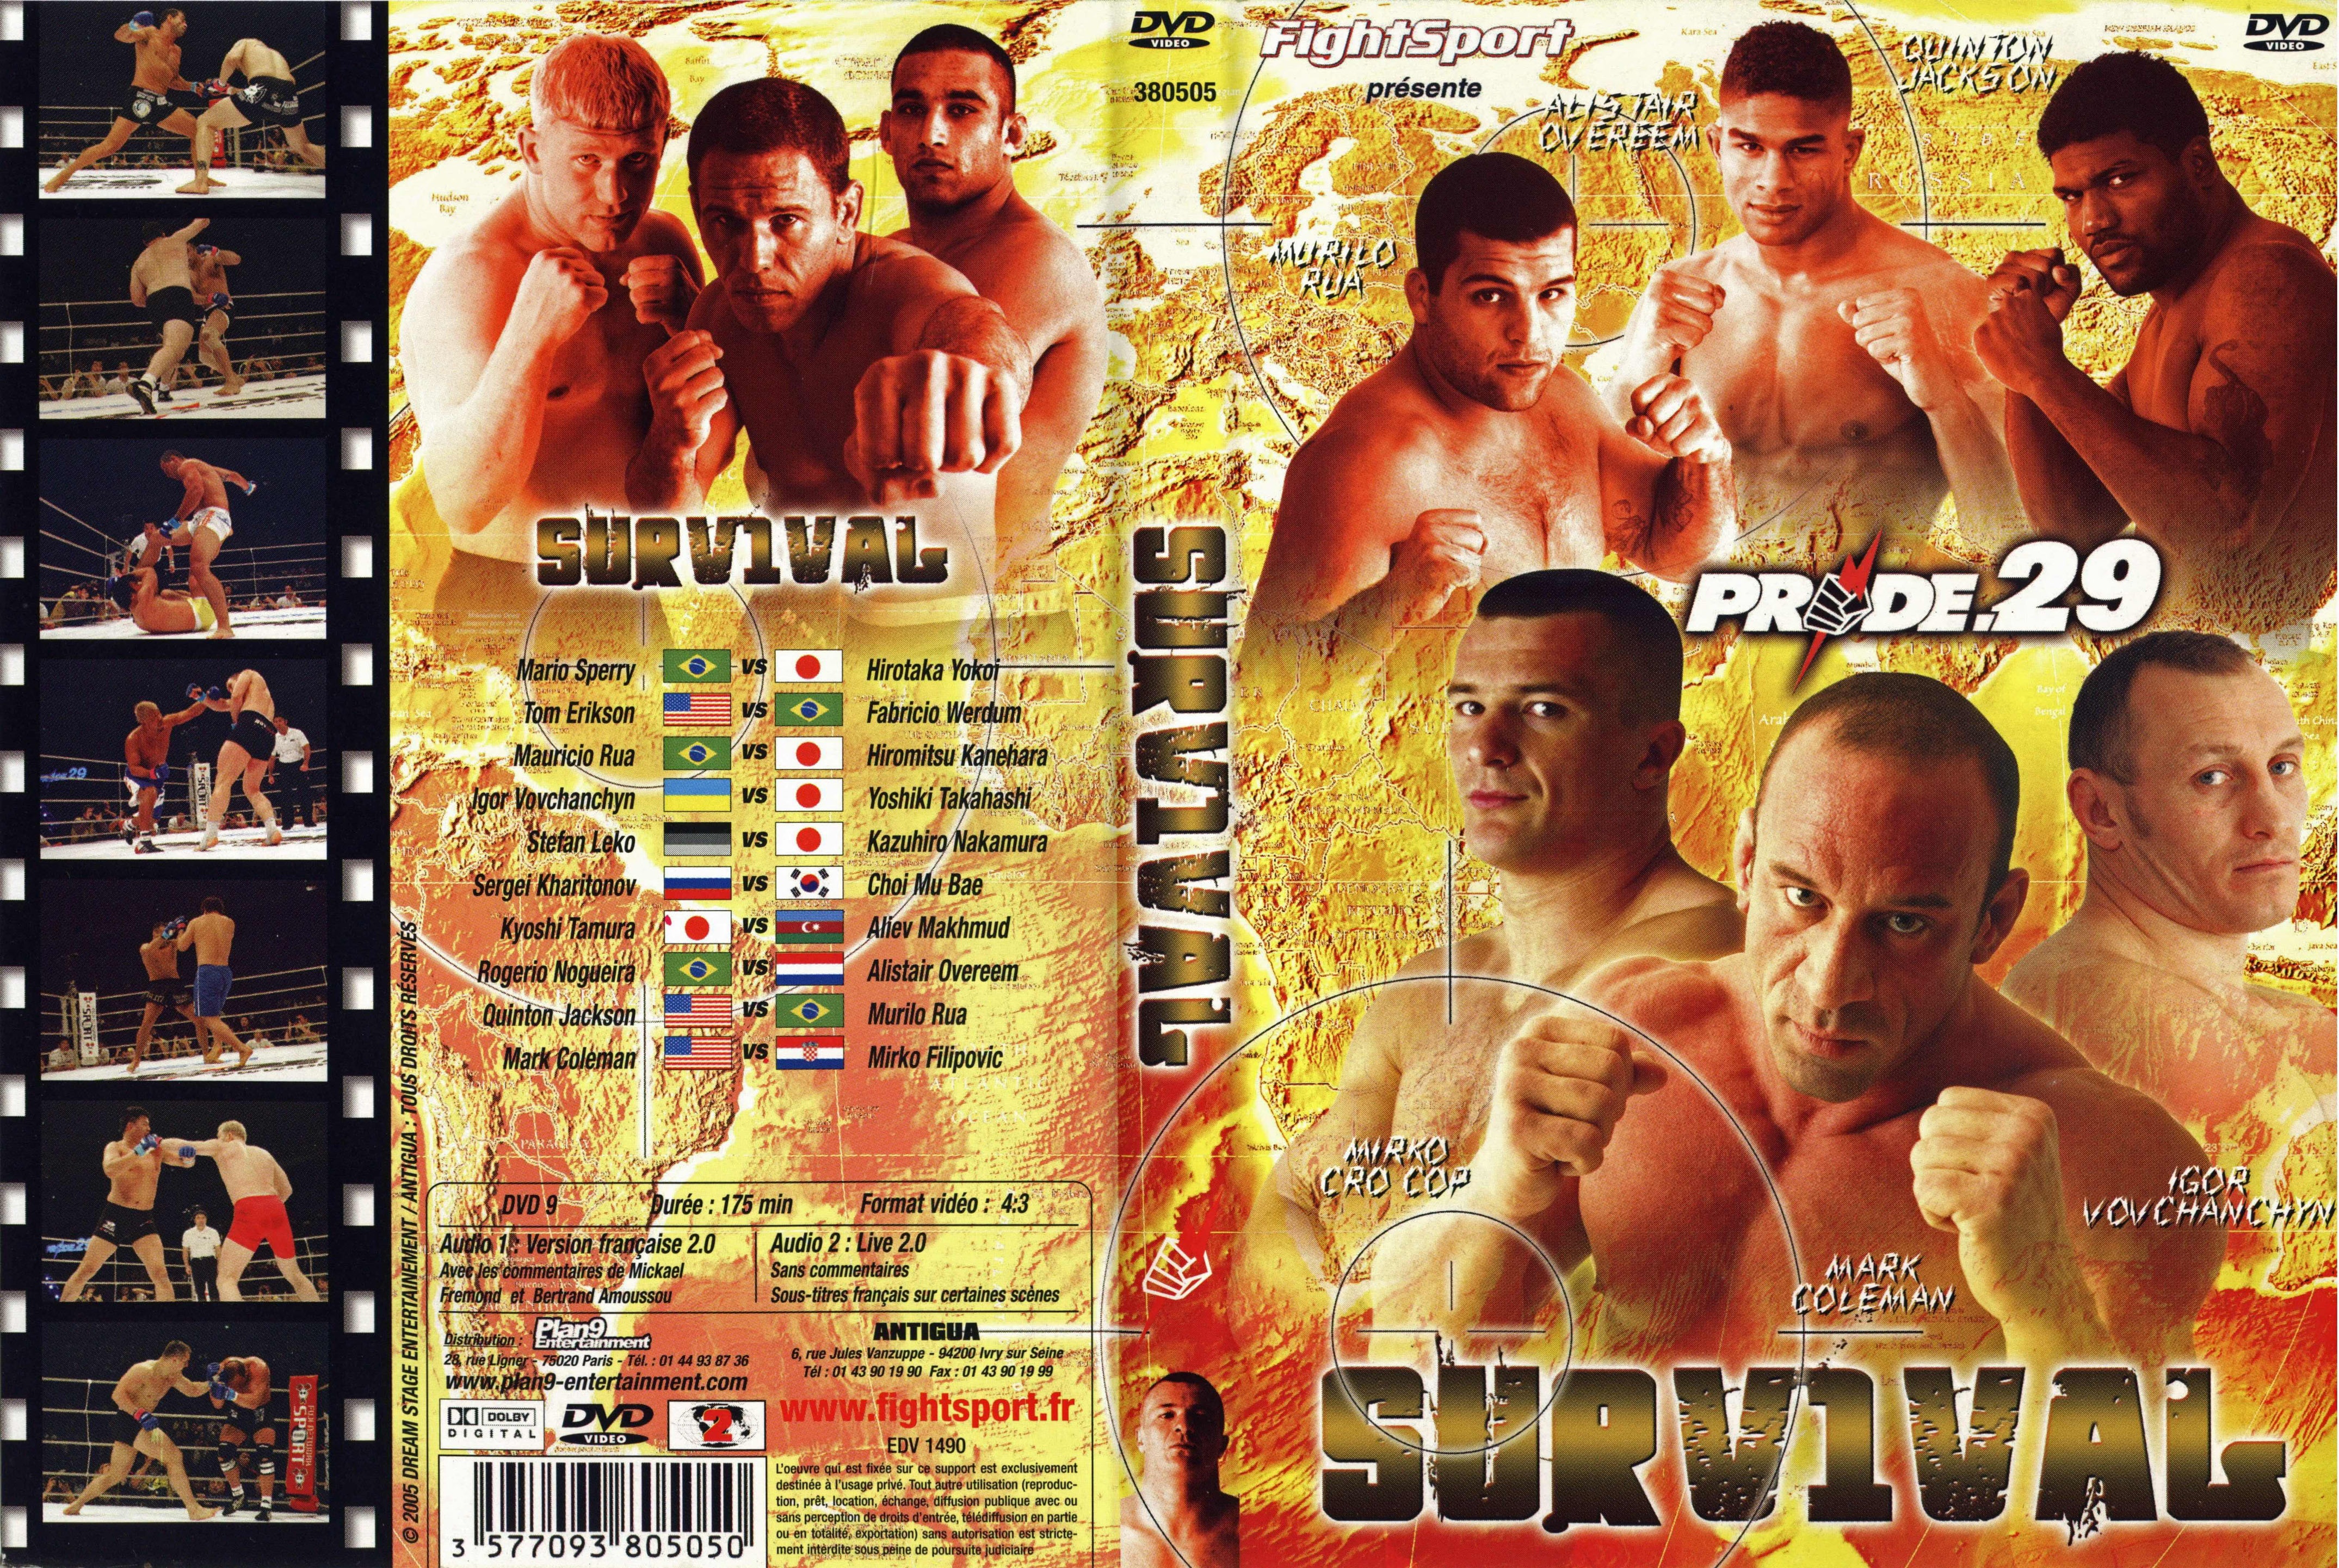 Jaquette DVD Pride 29 survival